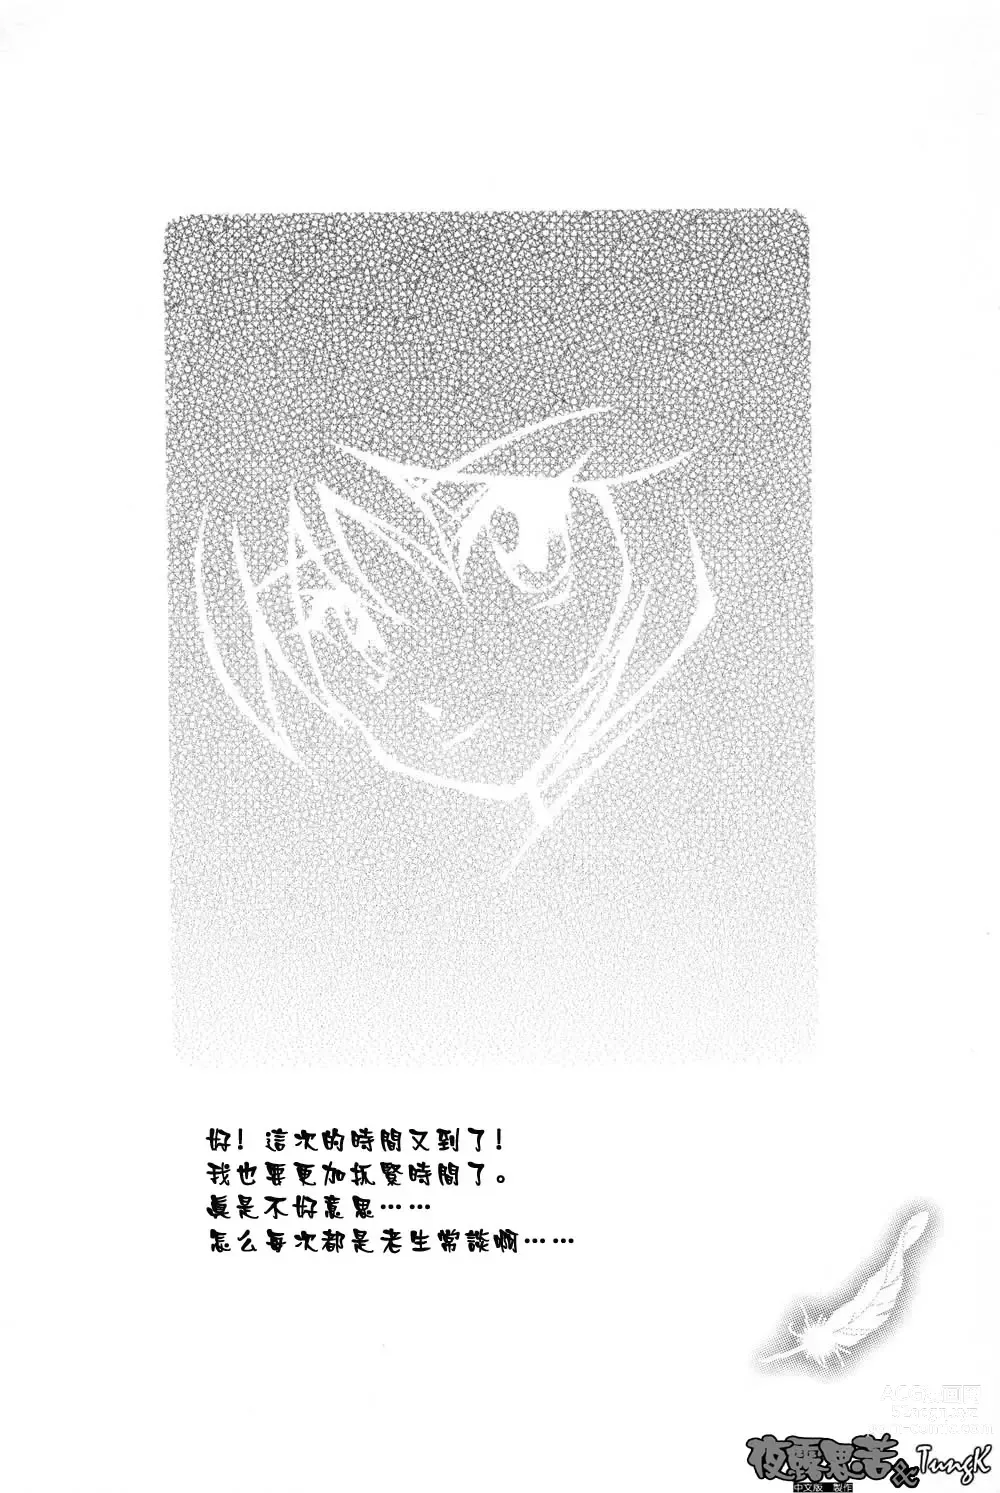 Page 179 of manga 沒有窗戶的小屋